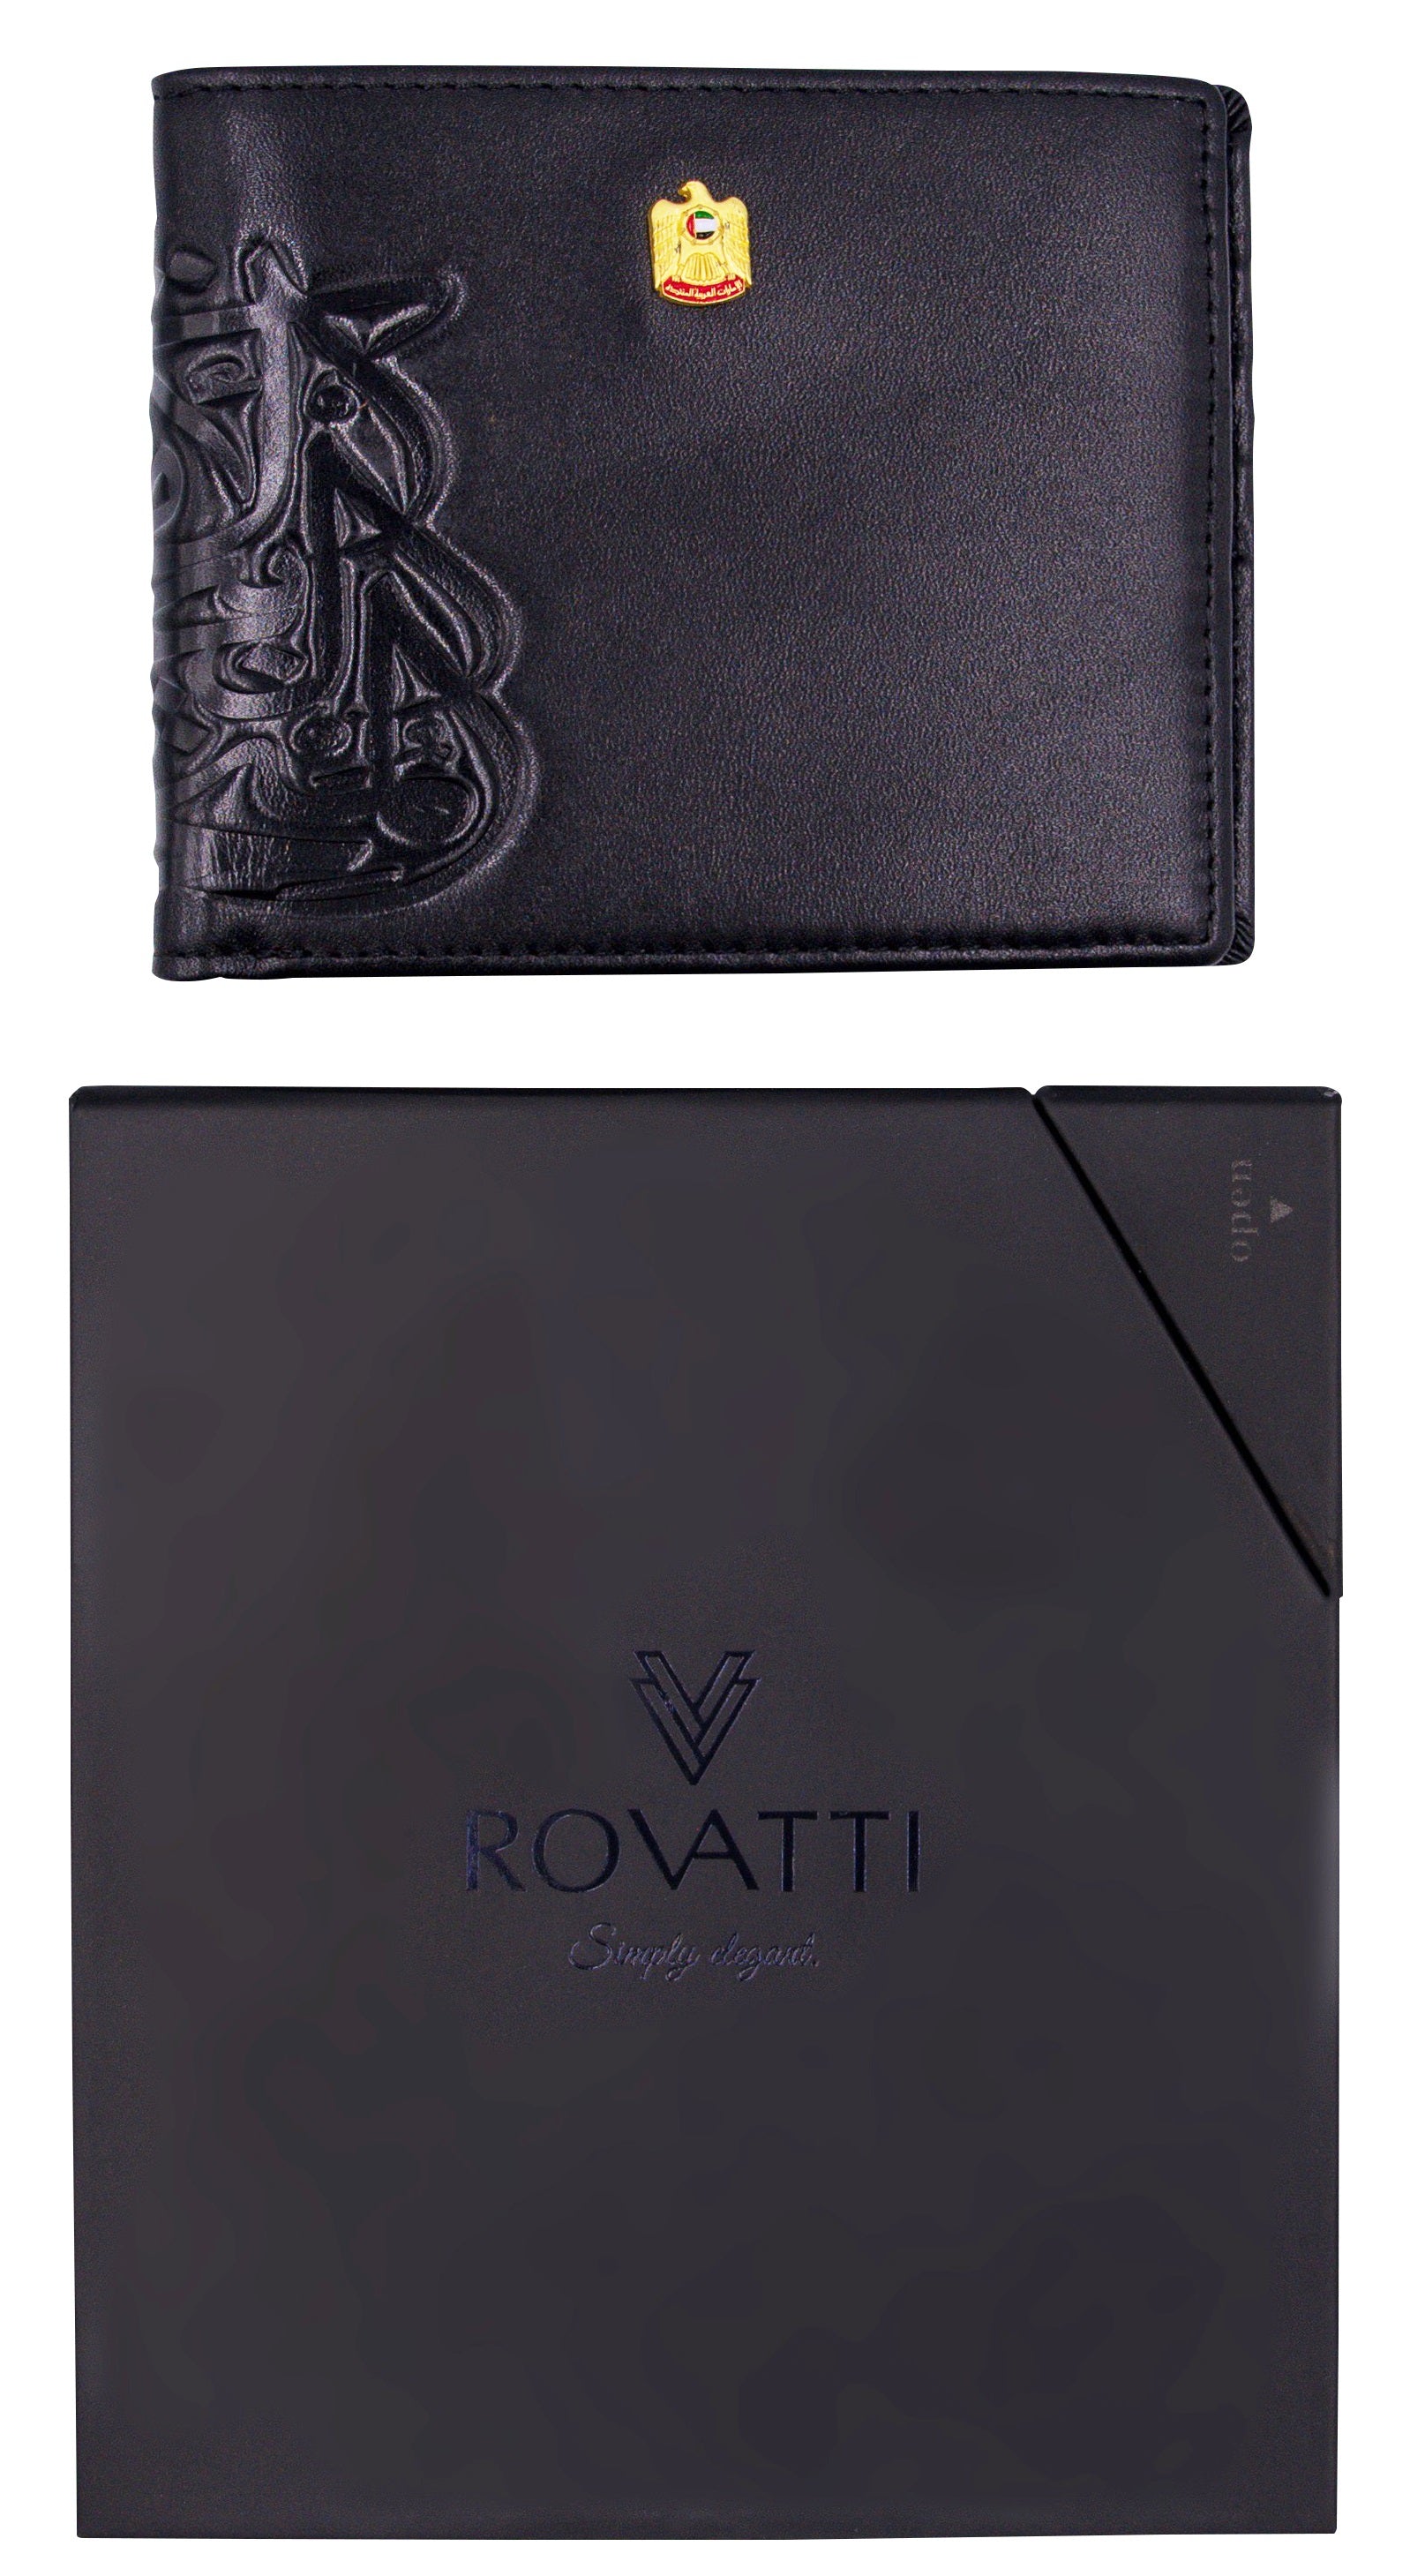 Wallet Due | buy leather wallet online | mens wallet online